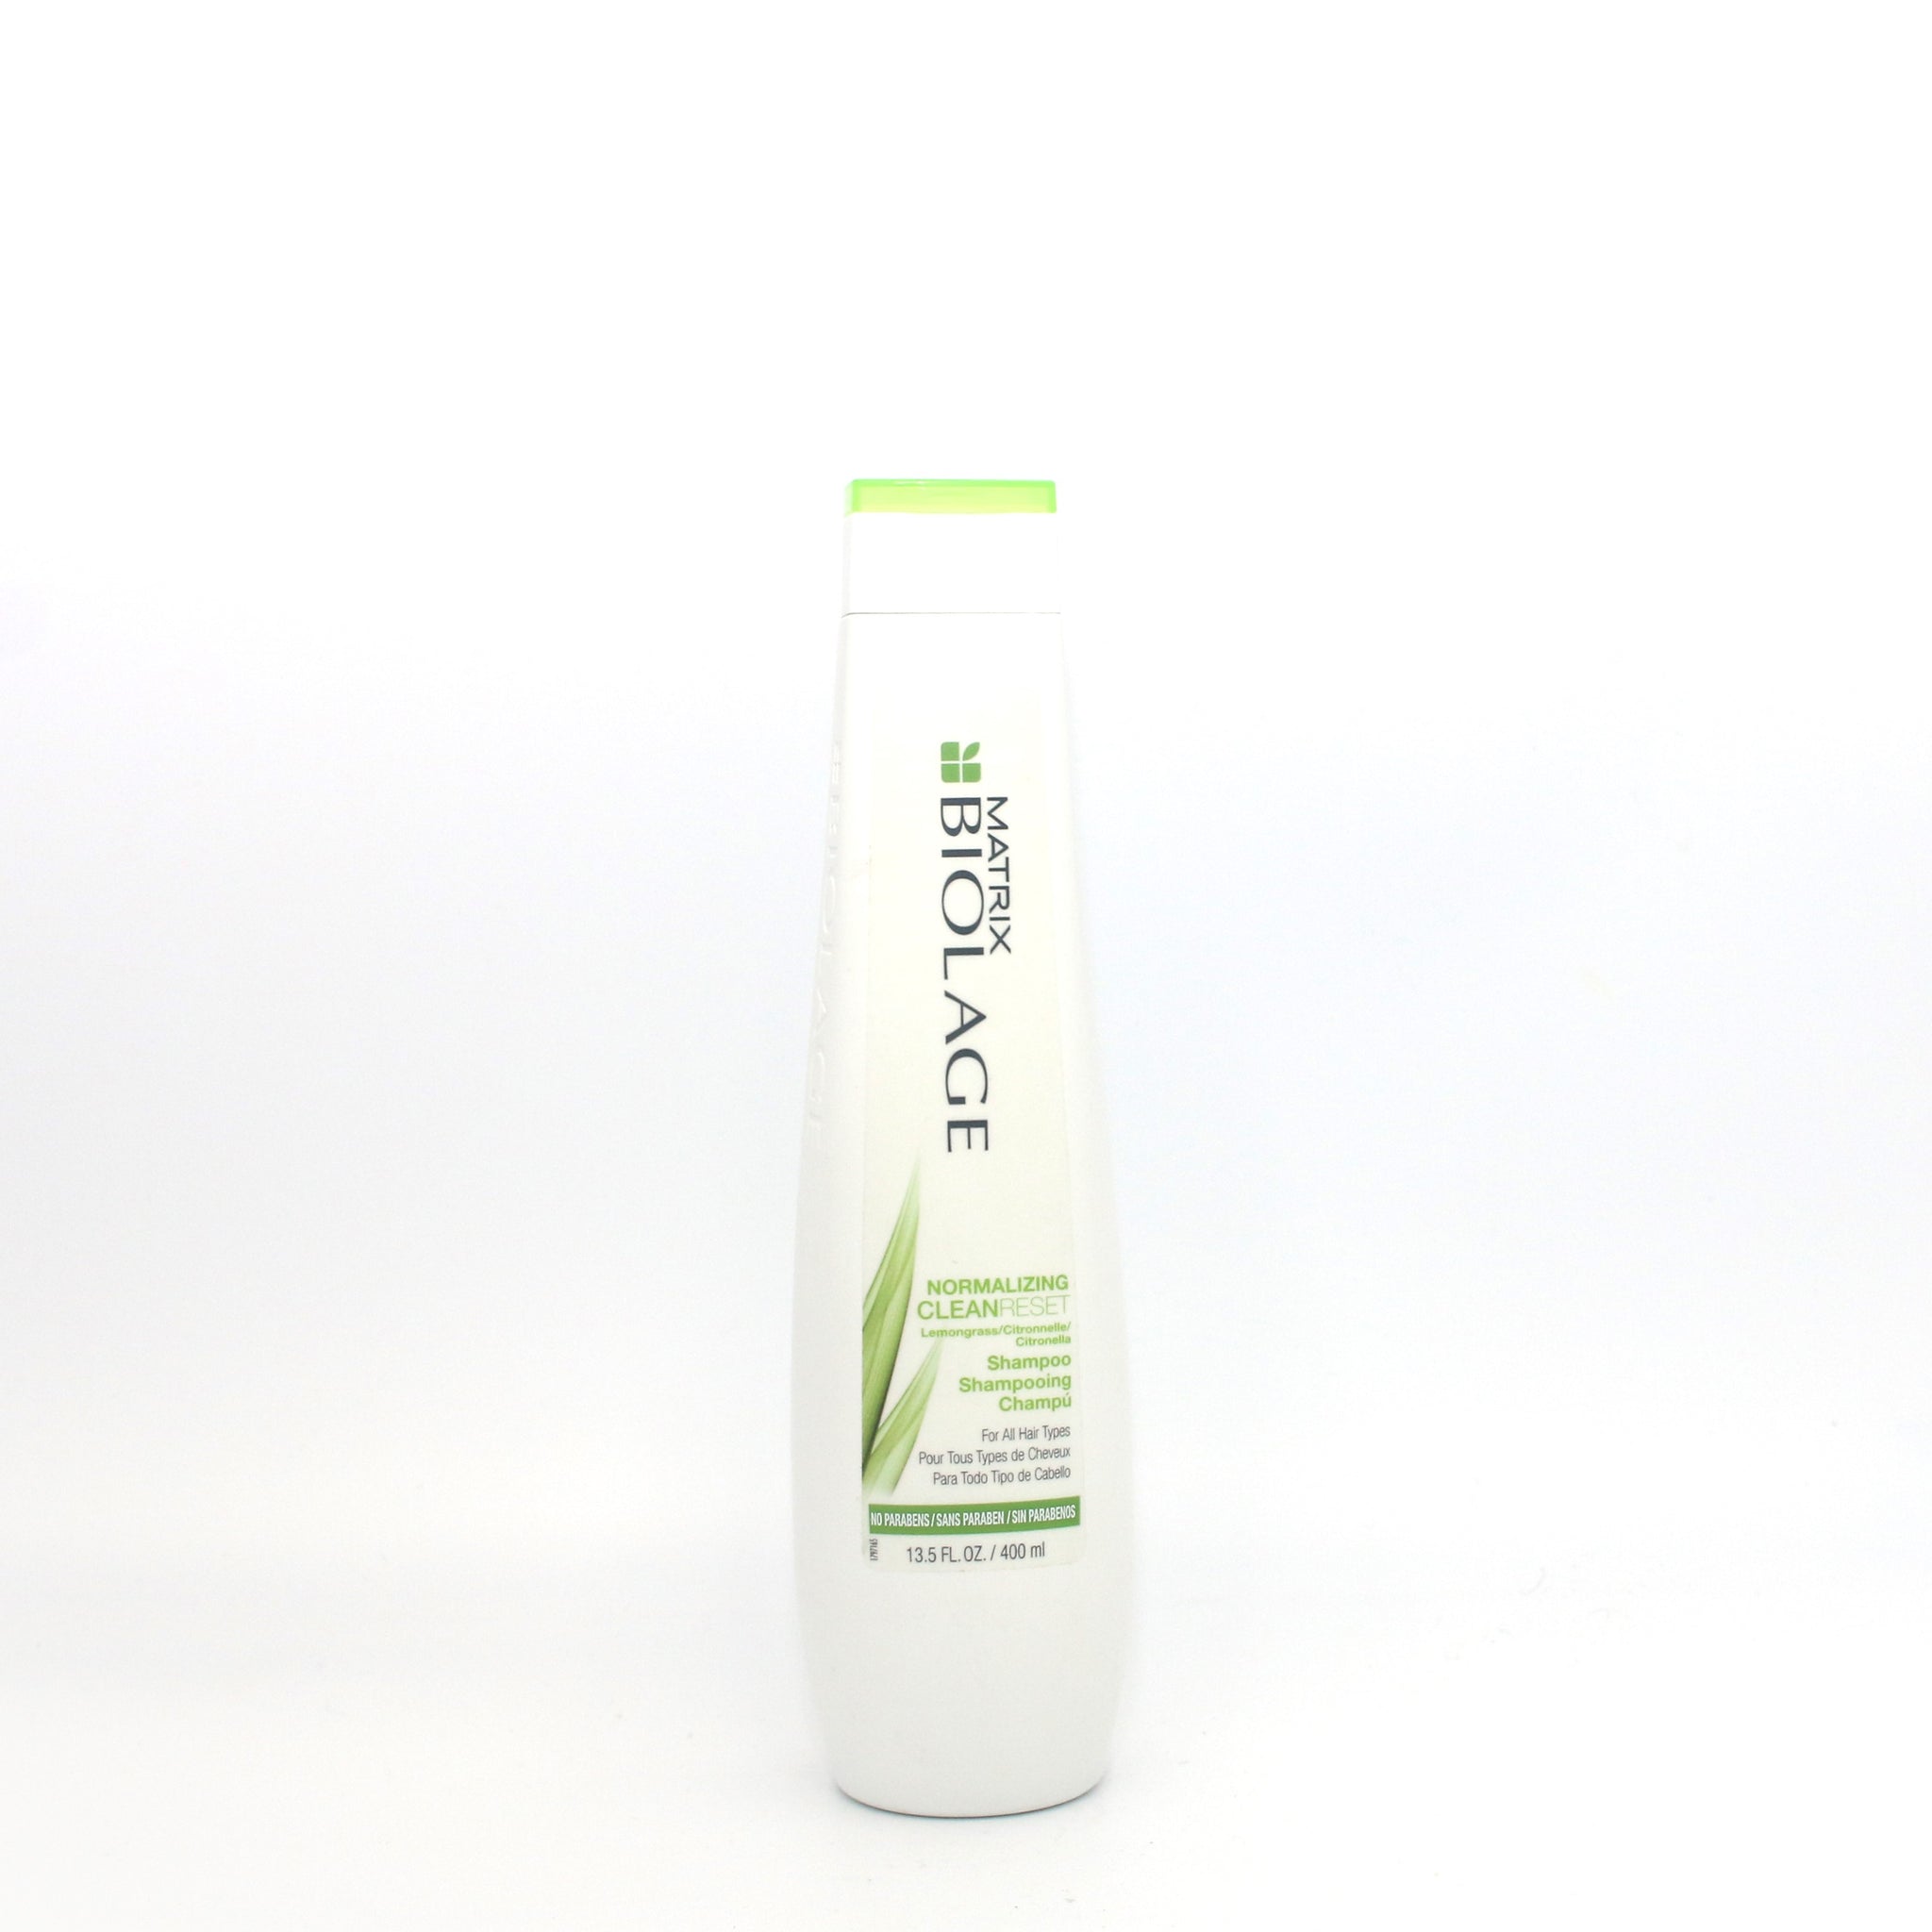 MATRIX Biolage Normalizing Clean Reset Shampoo 13.5 oz (Pack of 2)